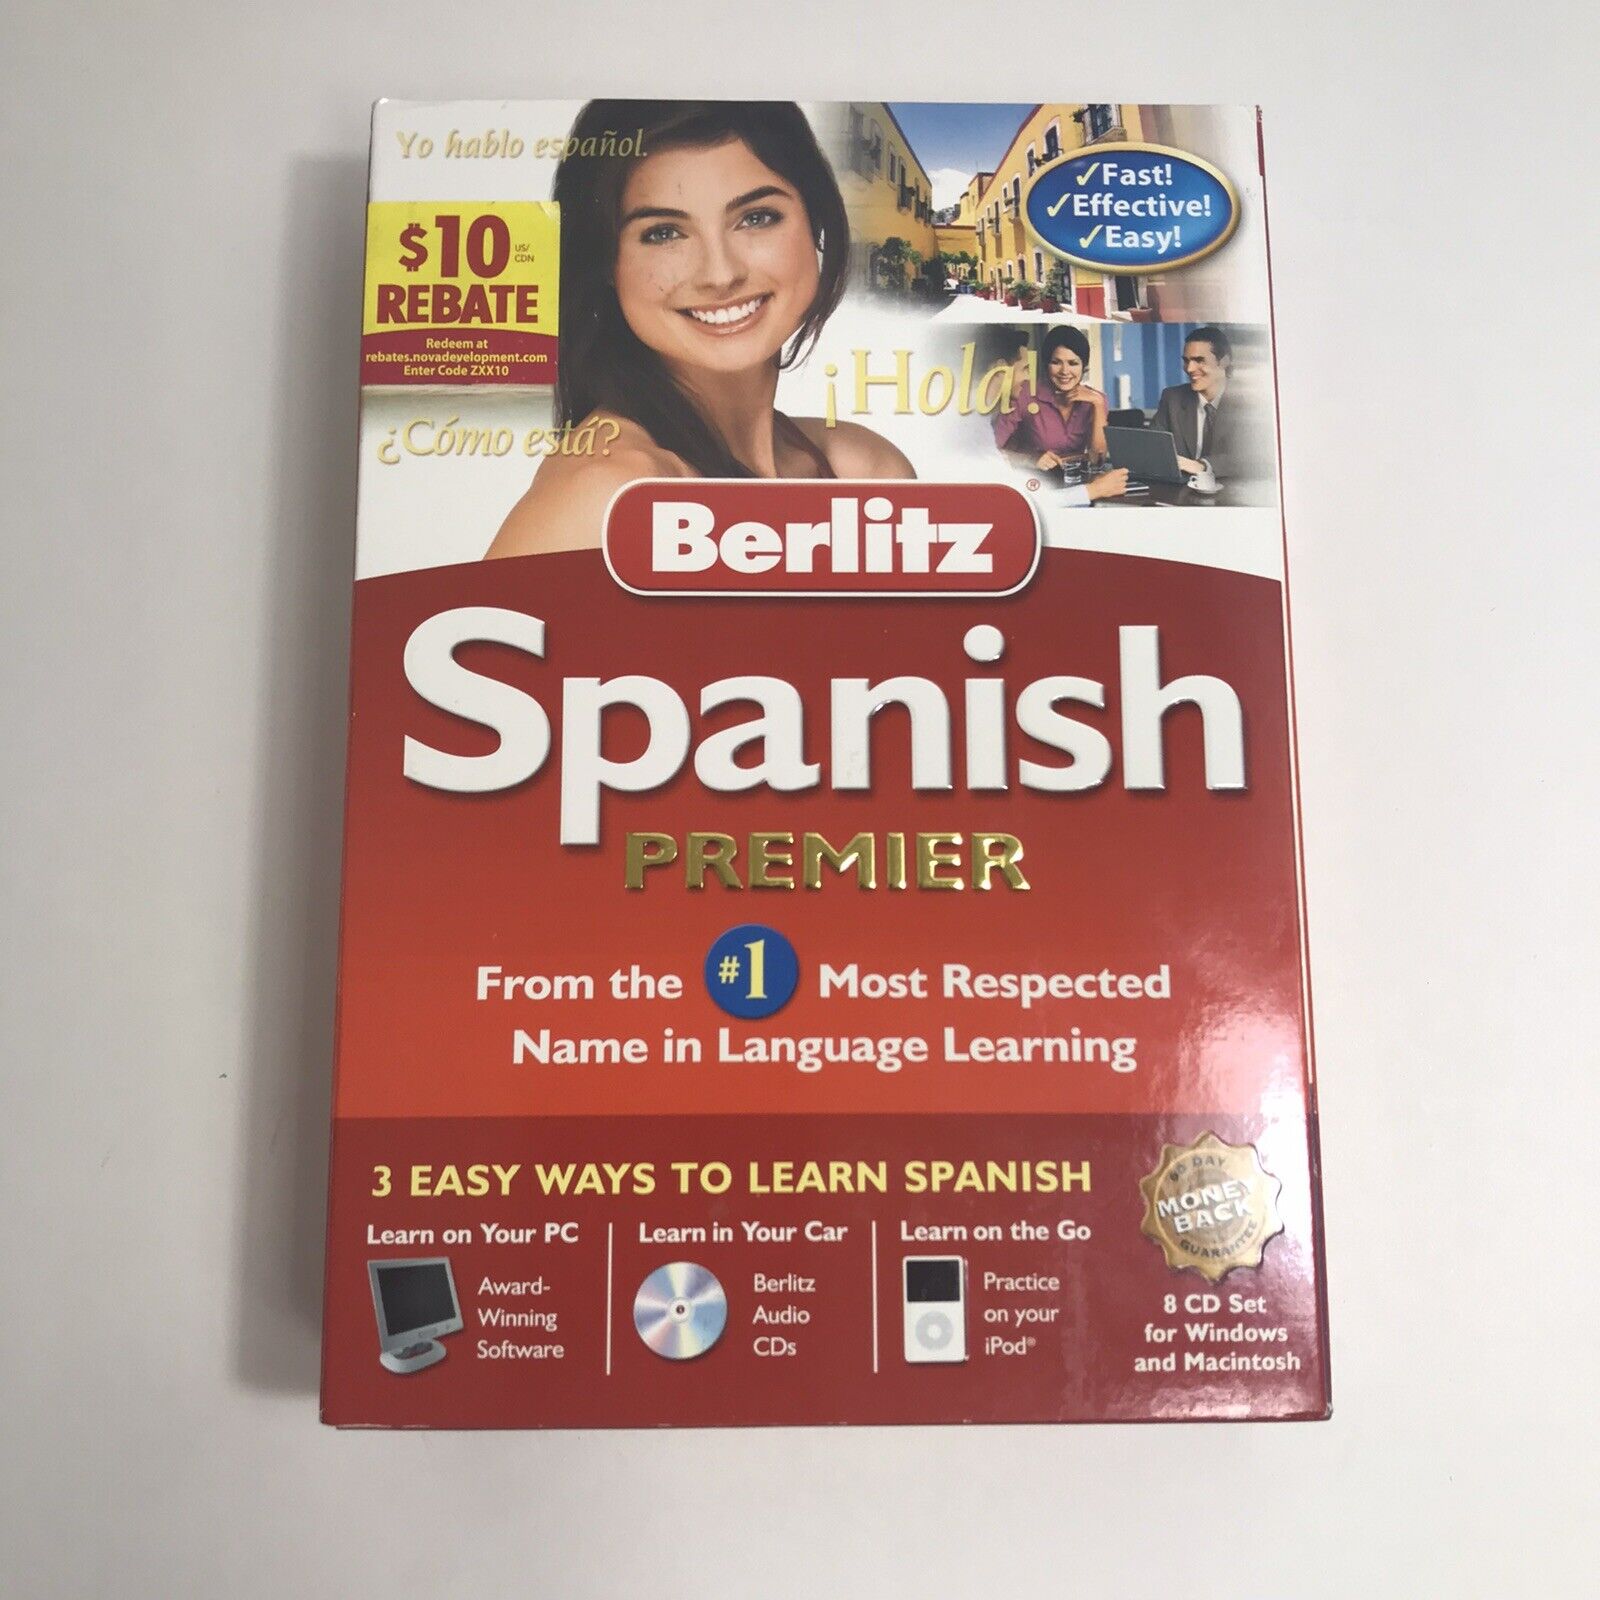 Berlitz Spanish Premier Software for PC, Mac 2006 Eight CD Set New In Box